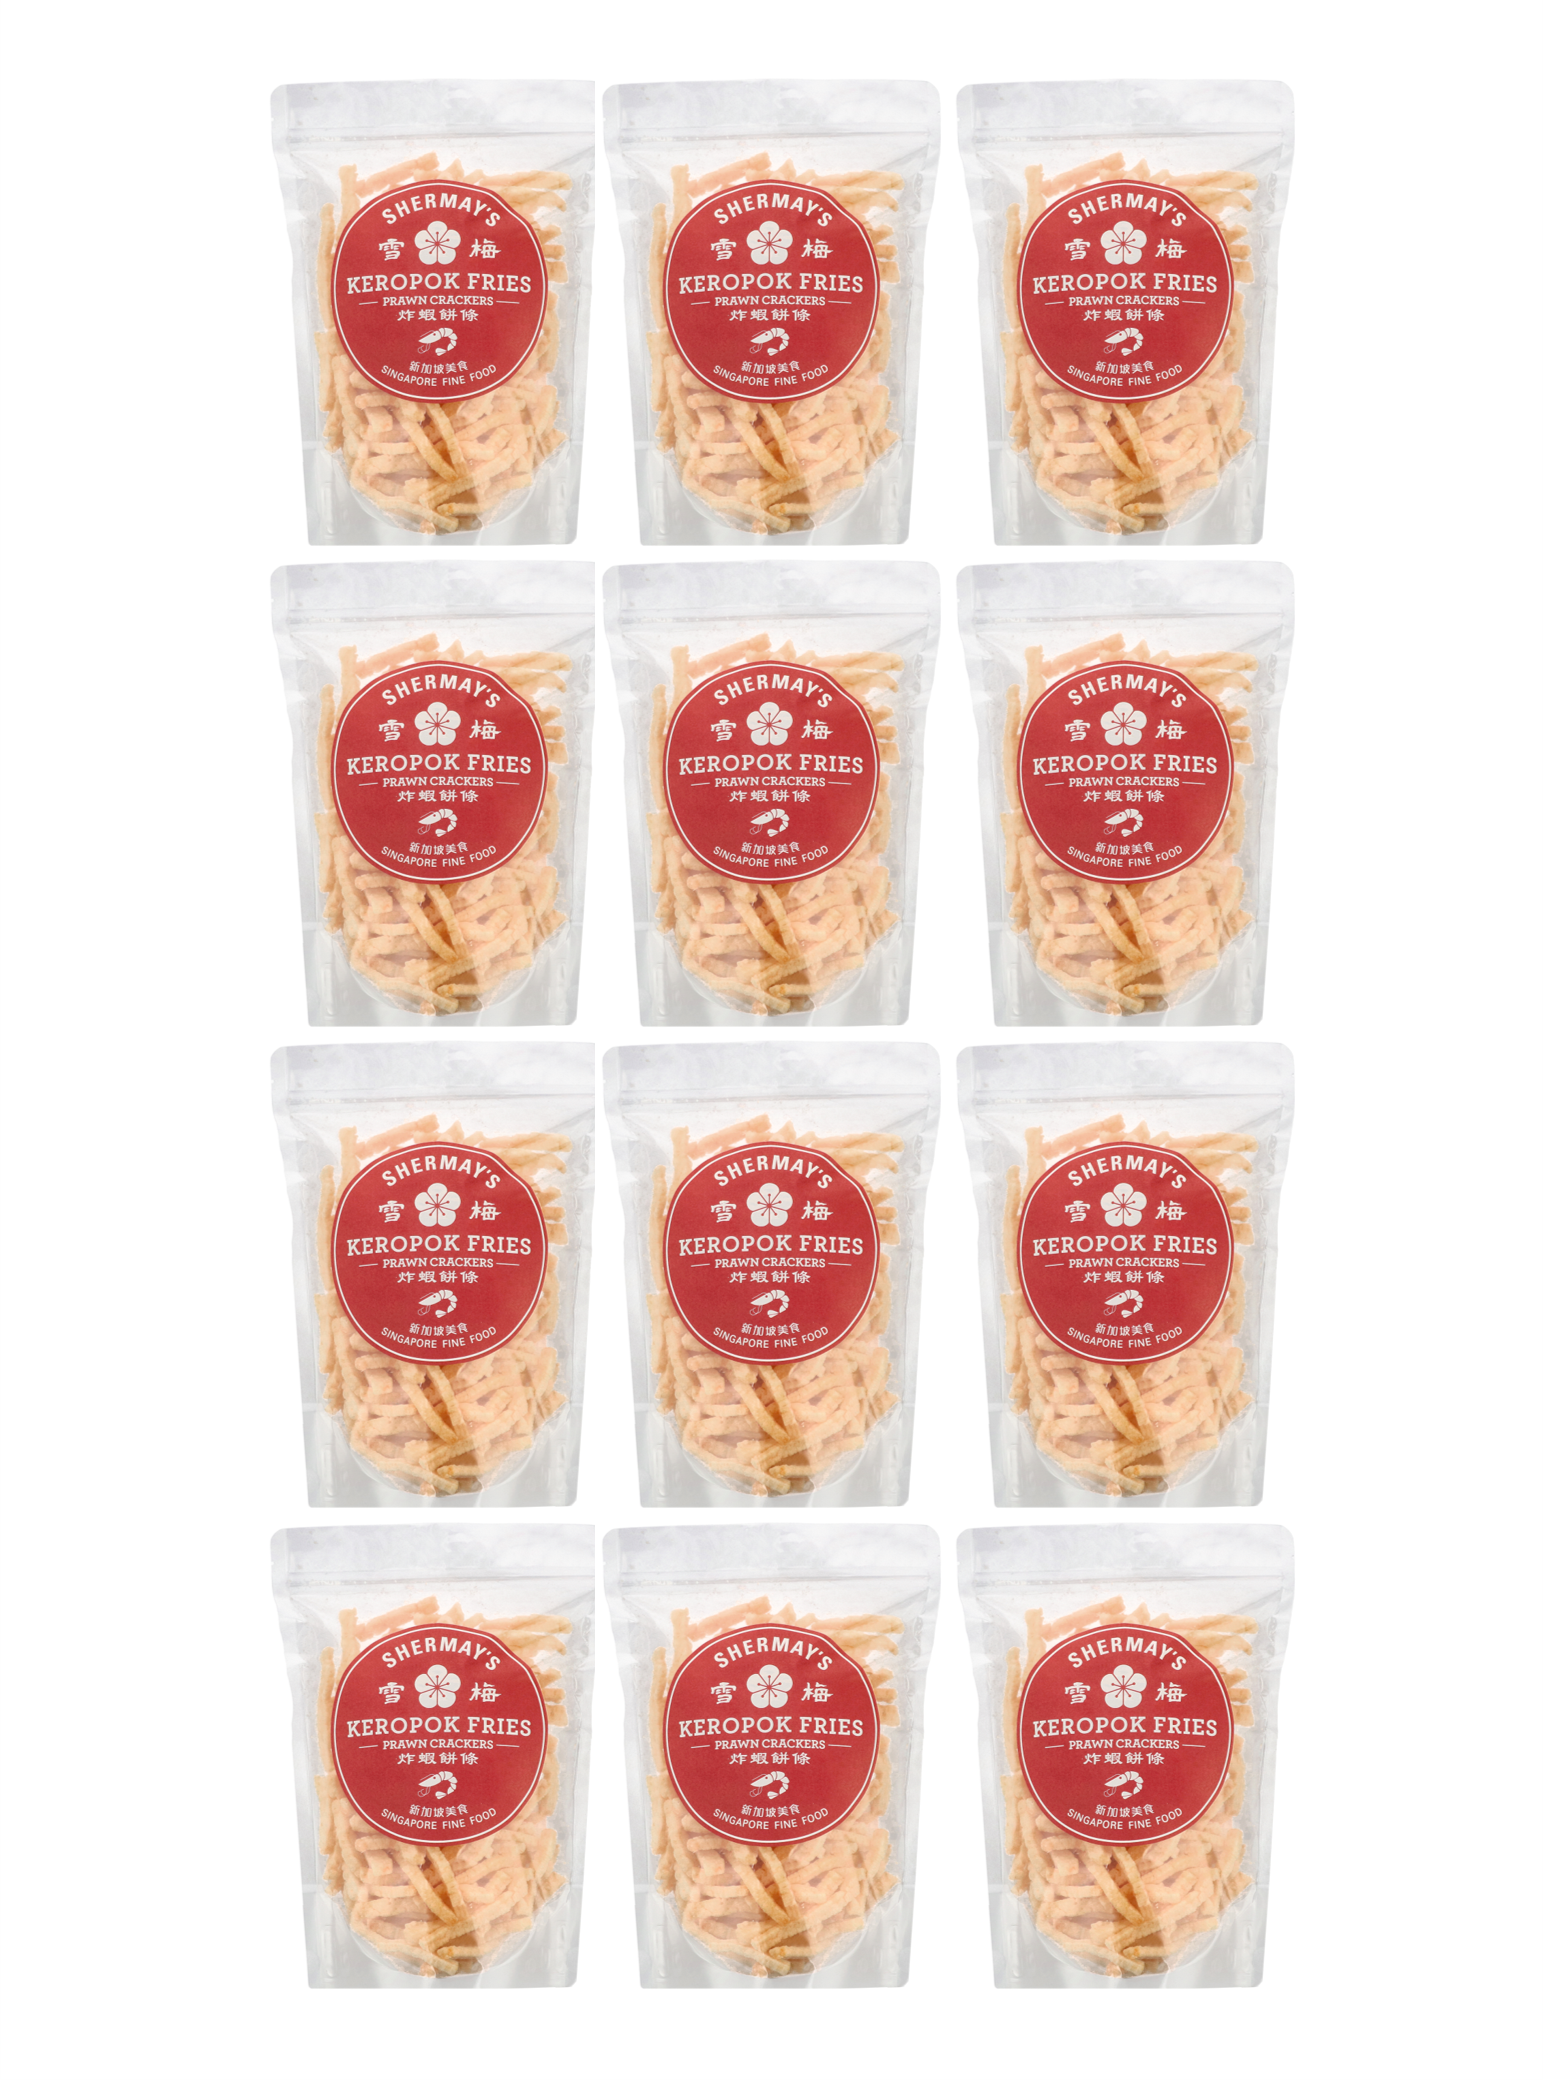 11 Keropok Fries Packets + 1 Keropok Fries Packet FREE